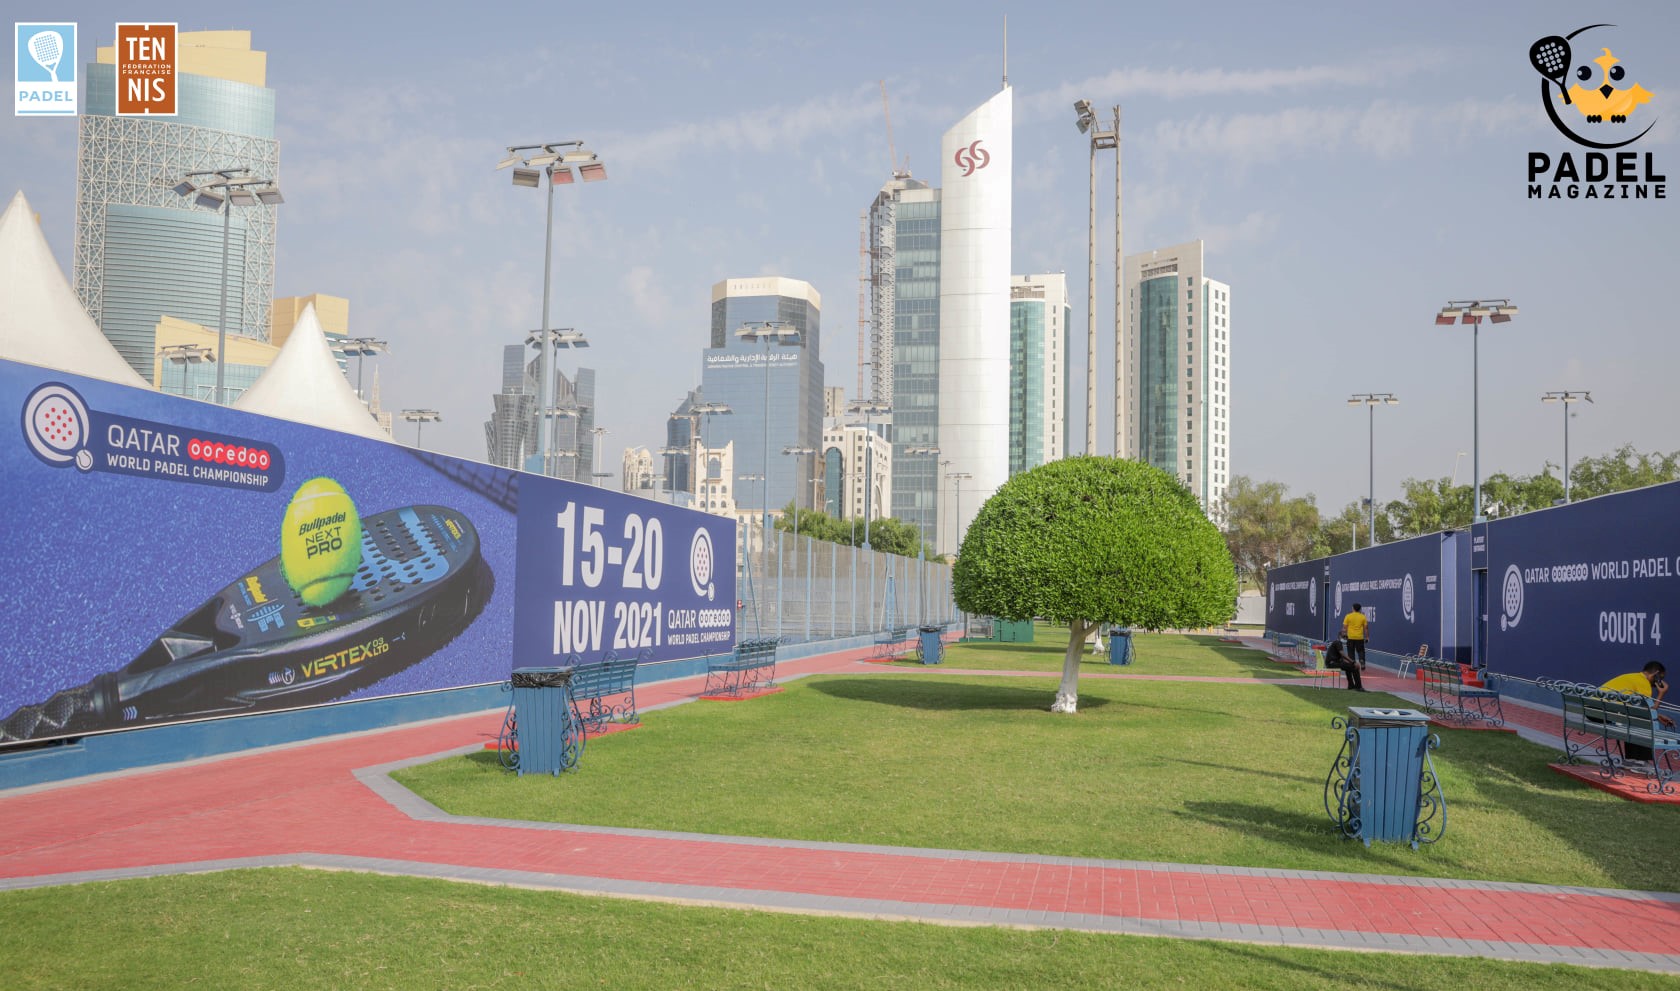 Qatar 2020 World Buildings organisation